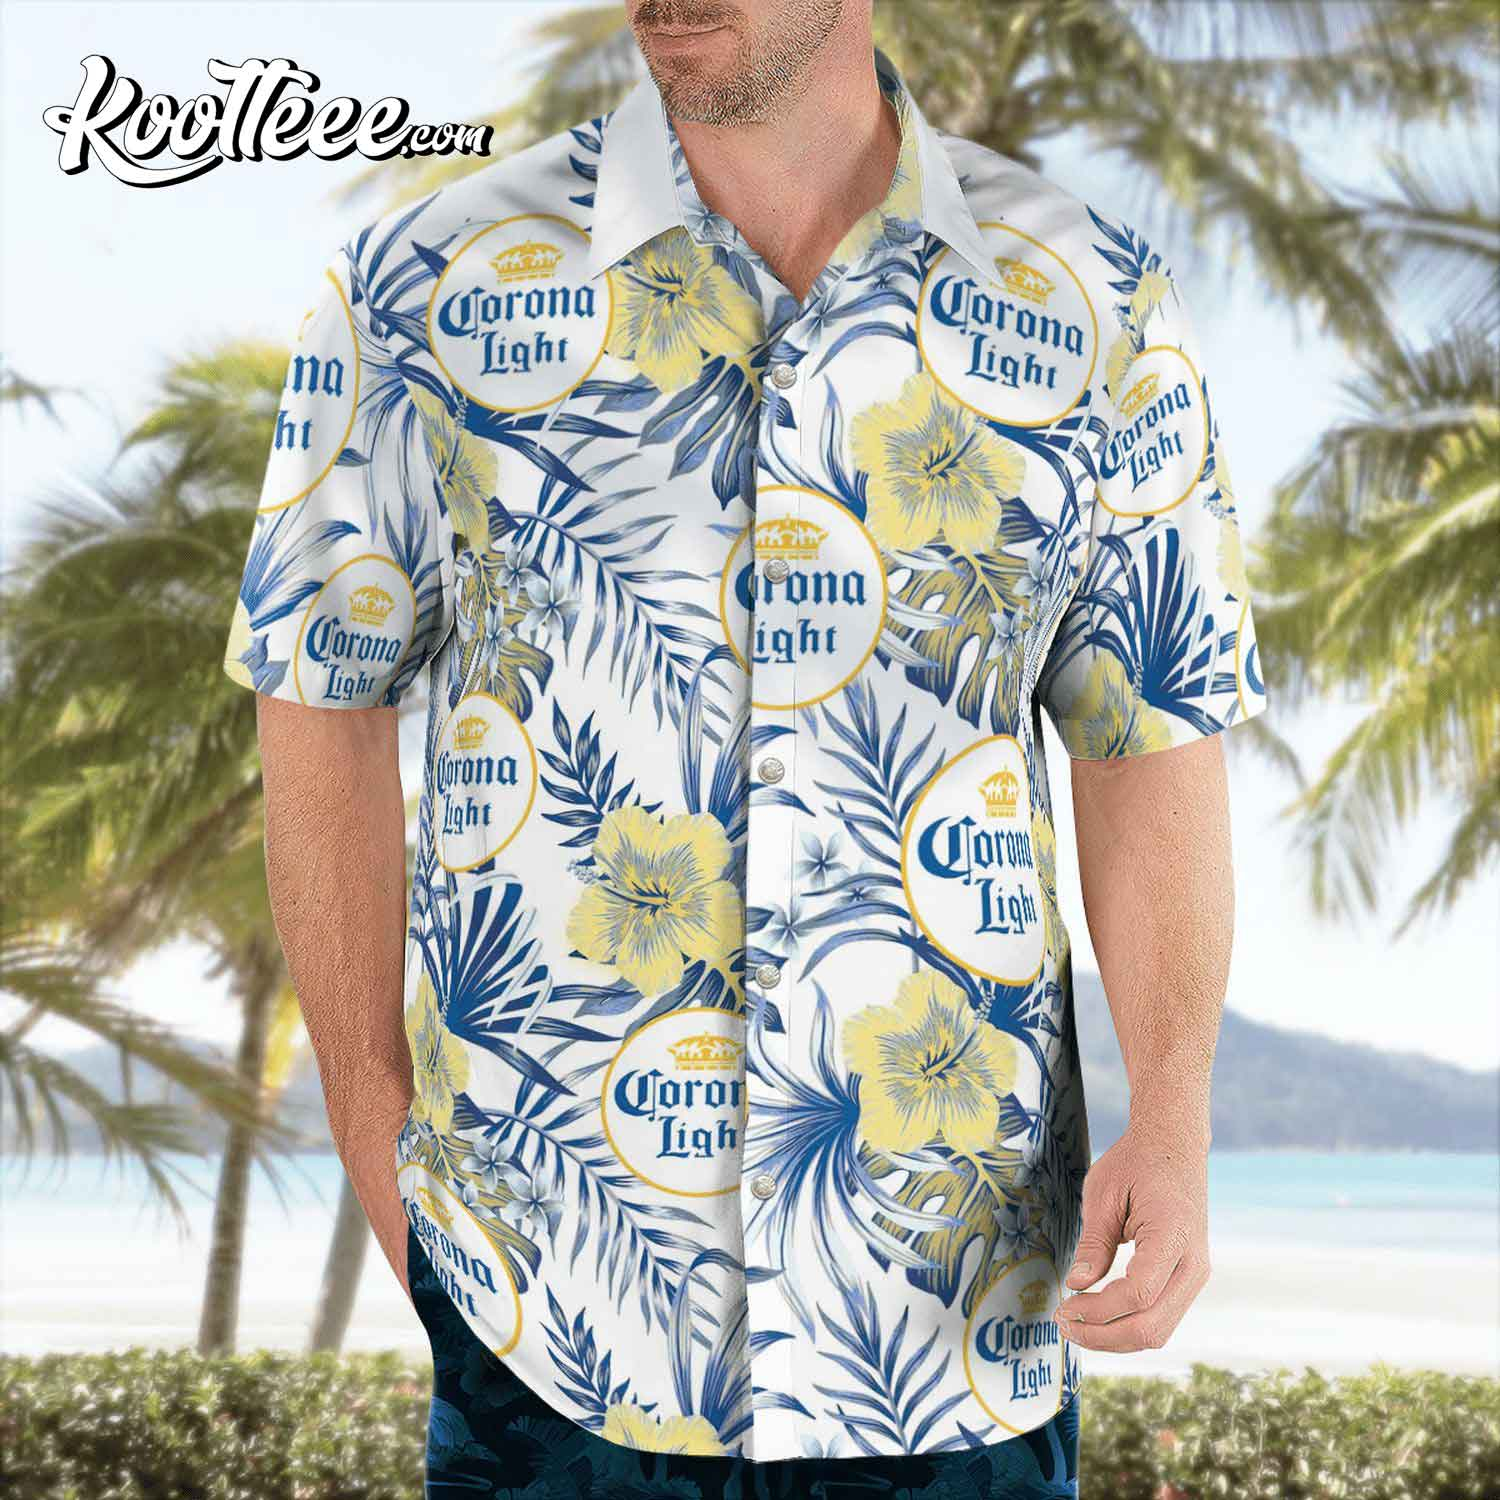 St. Louis Blues NHL Flower Hawaiian Shirt Style Gift For Men